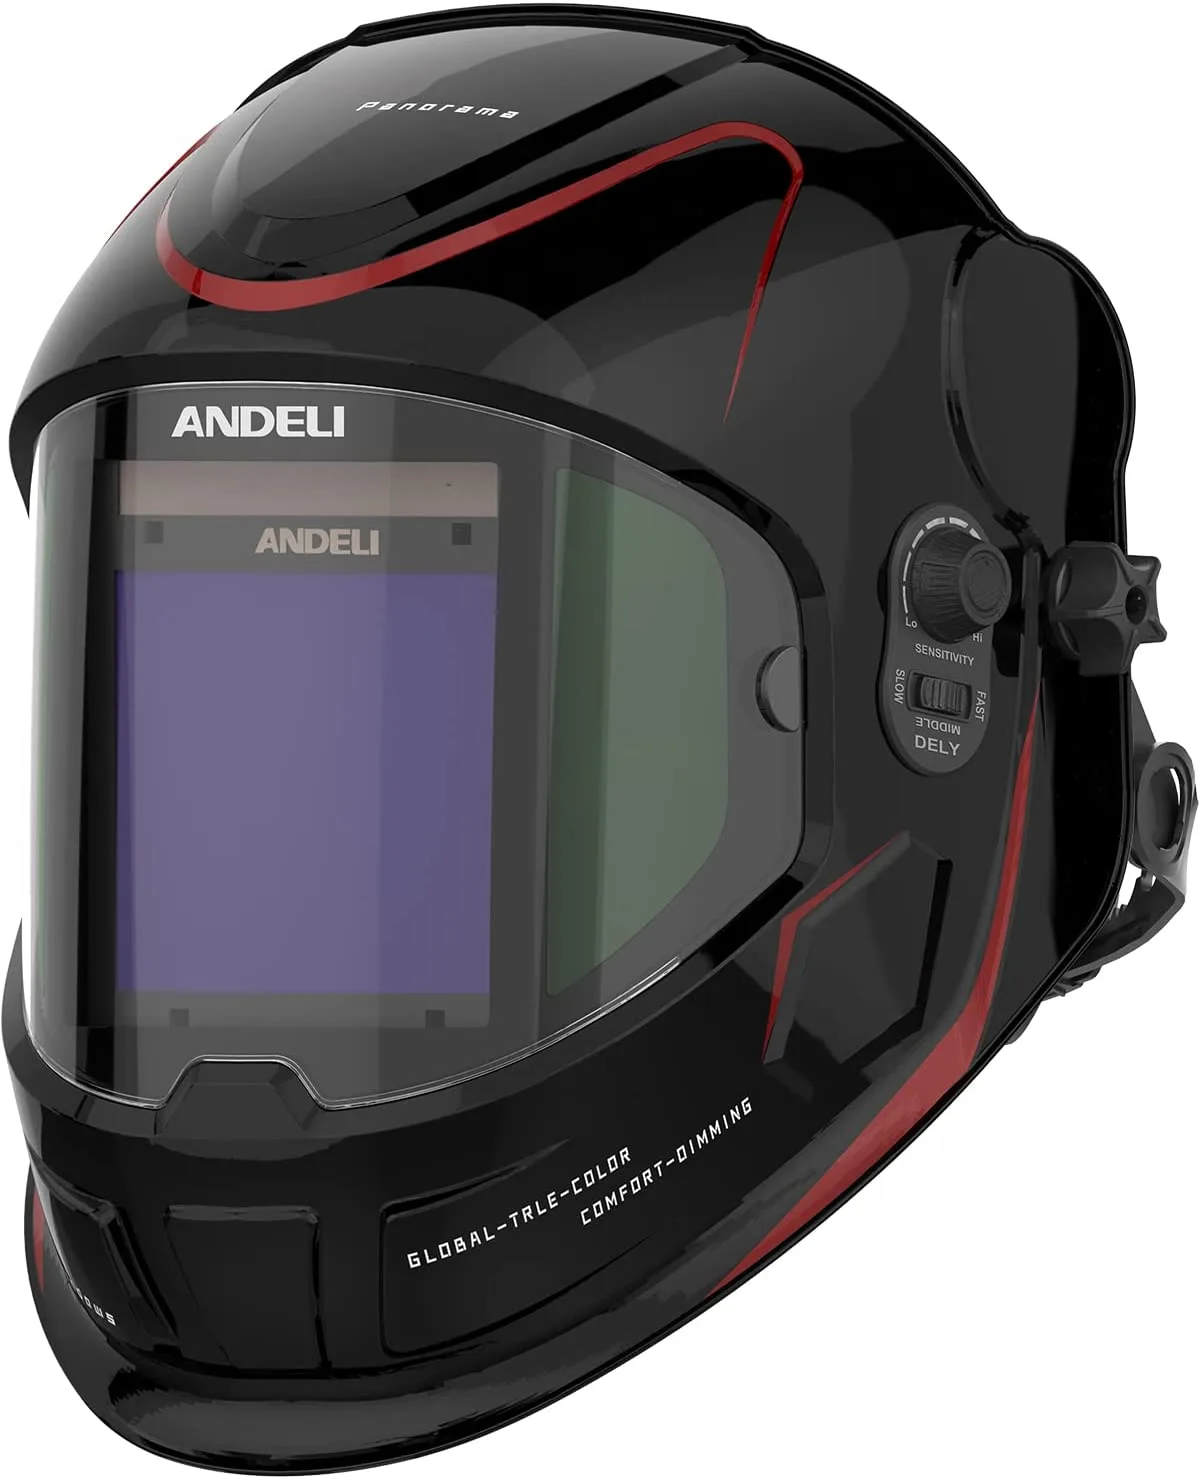 ANDELI Digital Auto Darkening Helmet